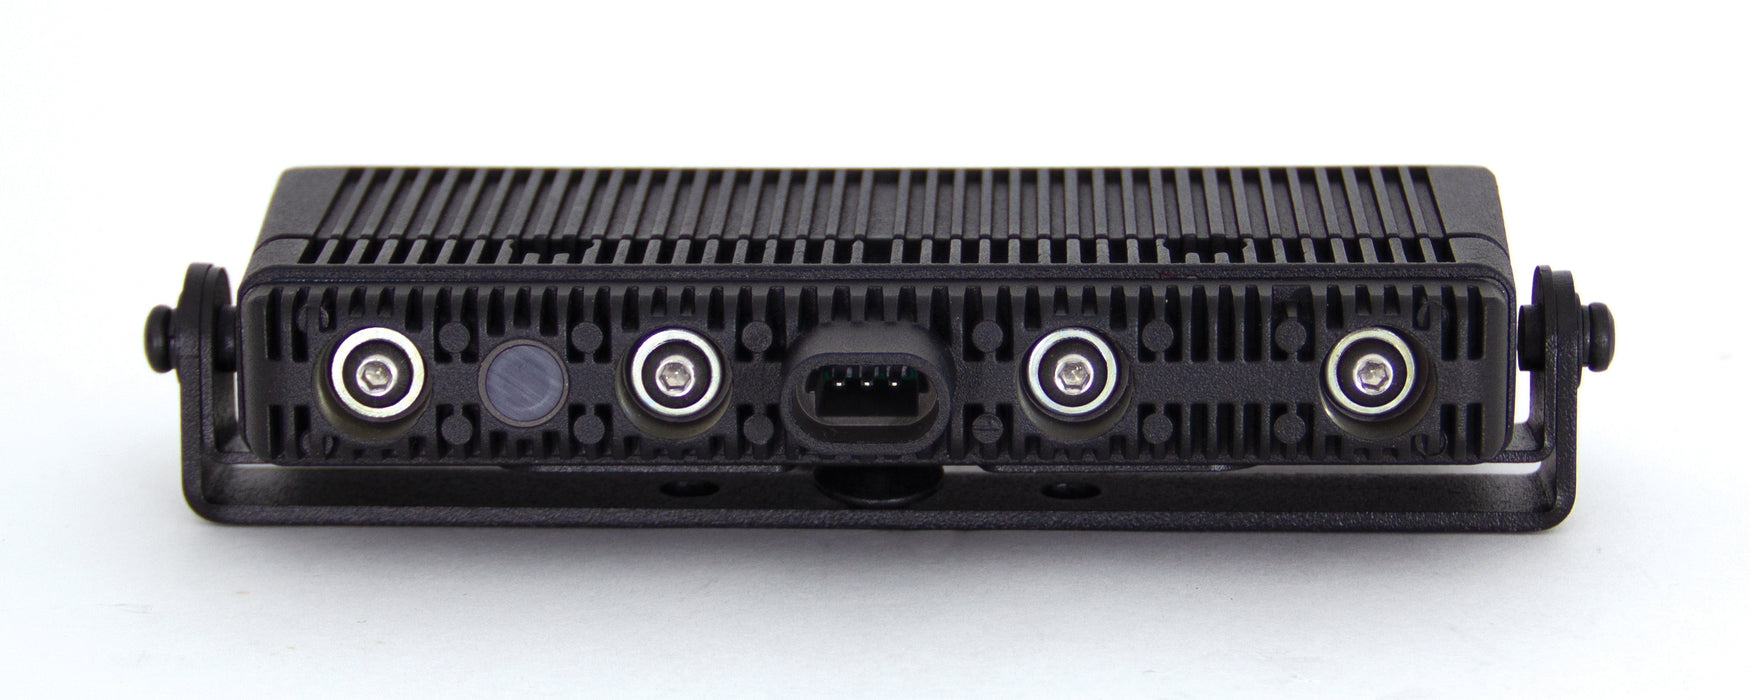 SoundOff Signal mpower® HP 6×1 Light Kit, Includes (1) Light, (1) U- Shaped bracket with Mounting Hardware